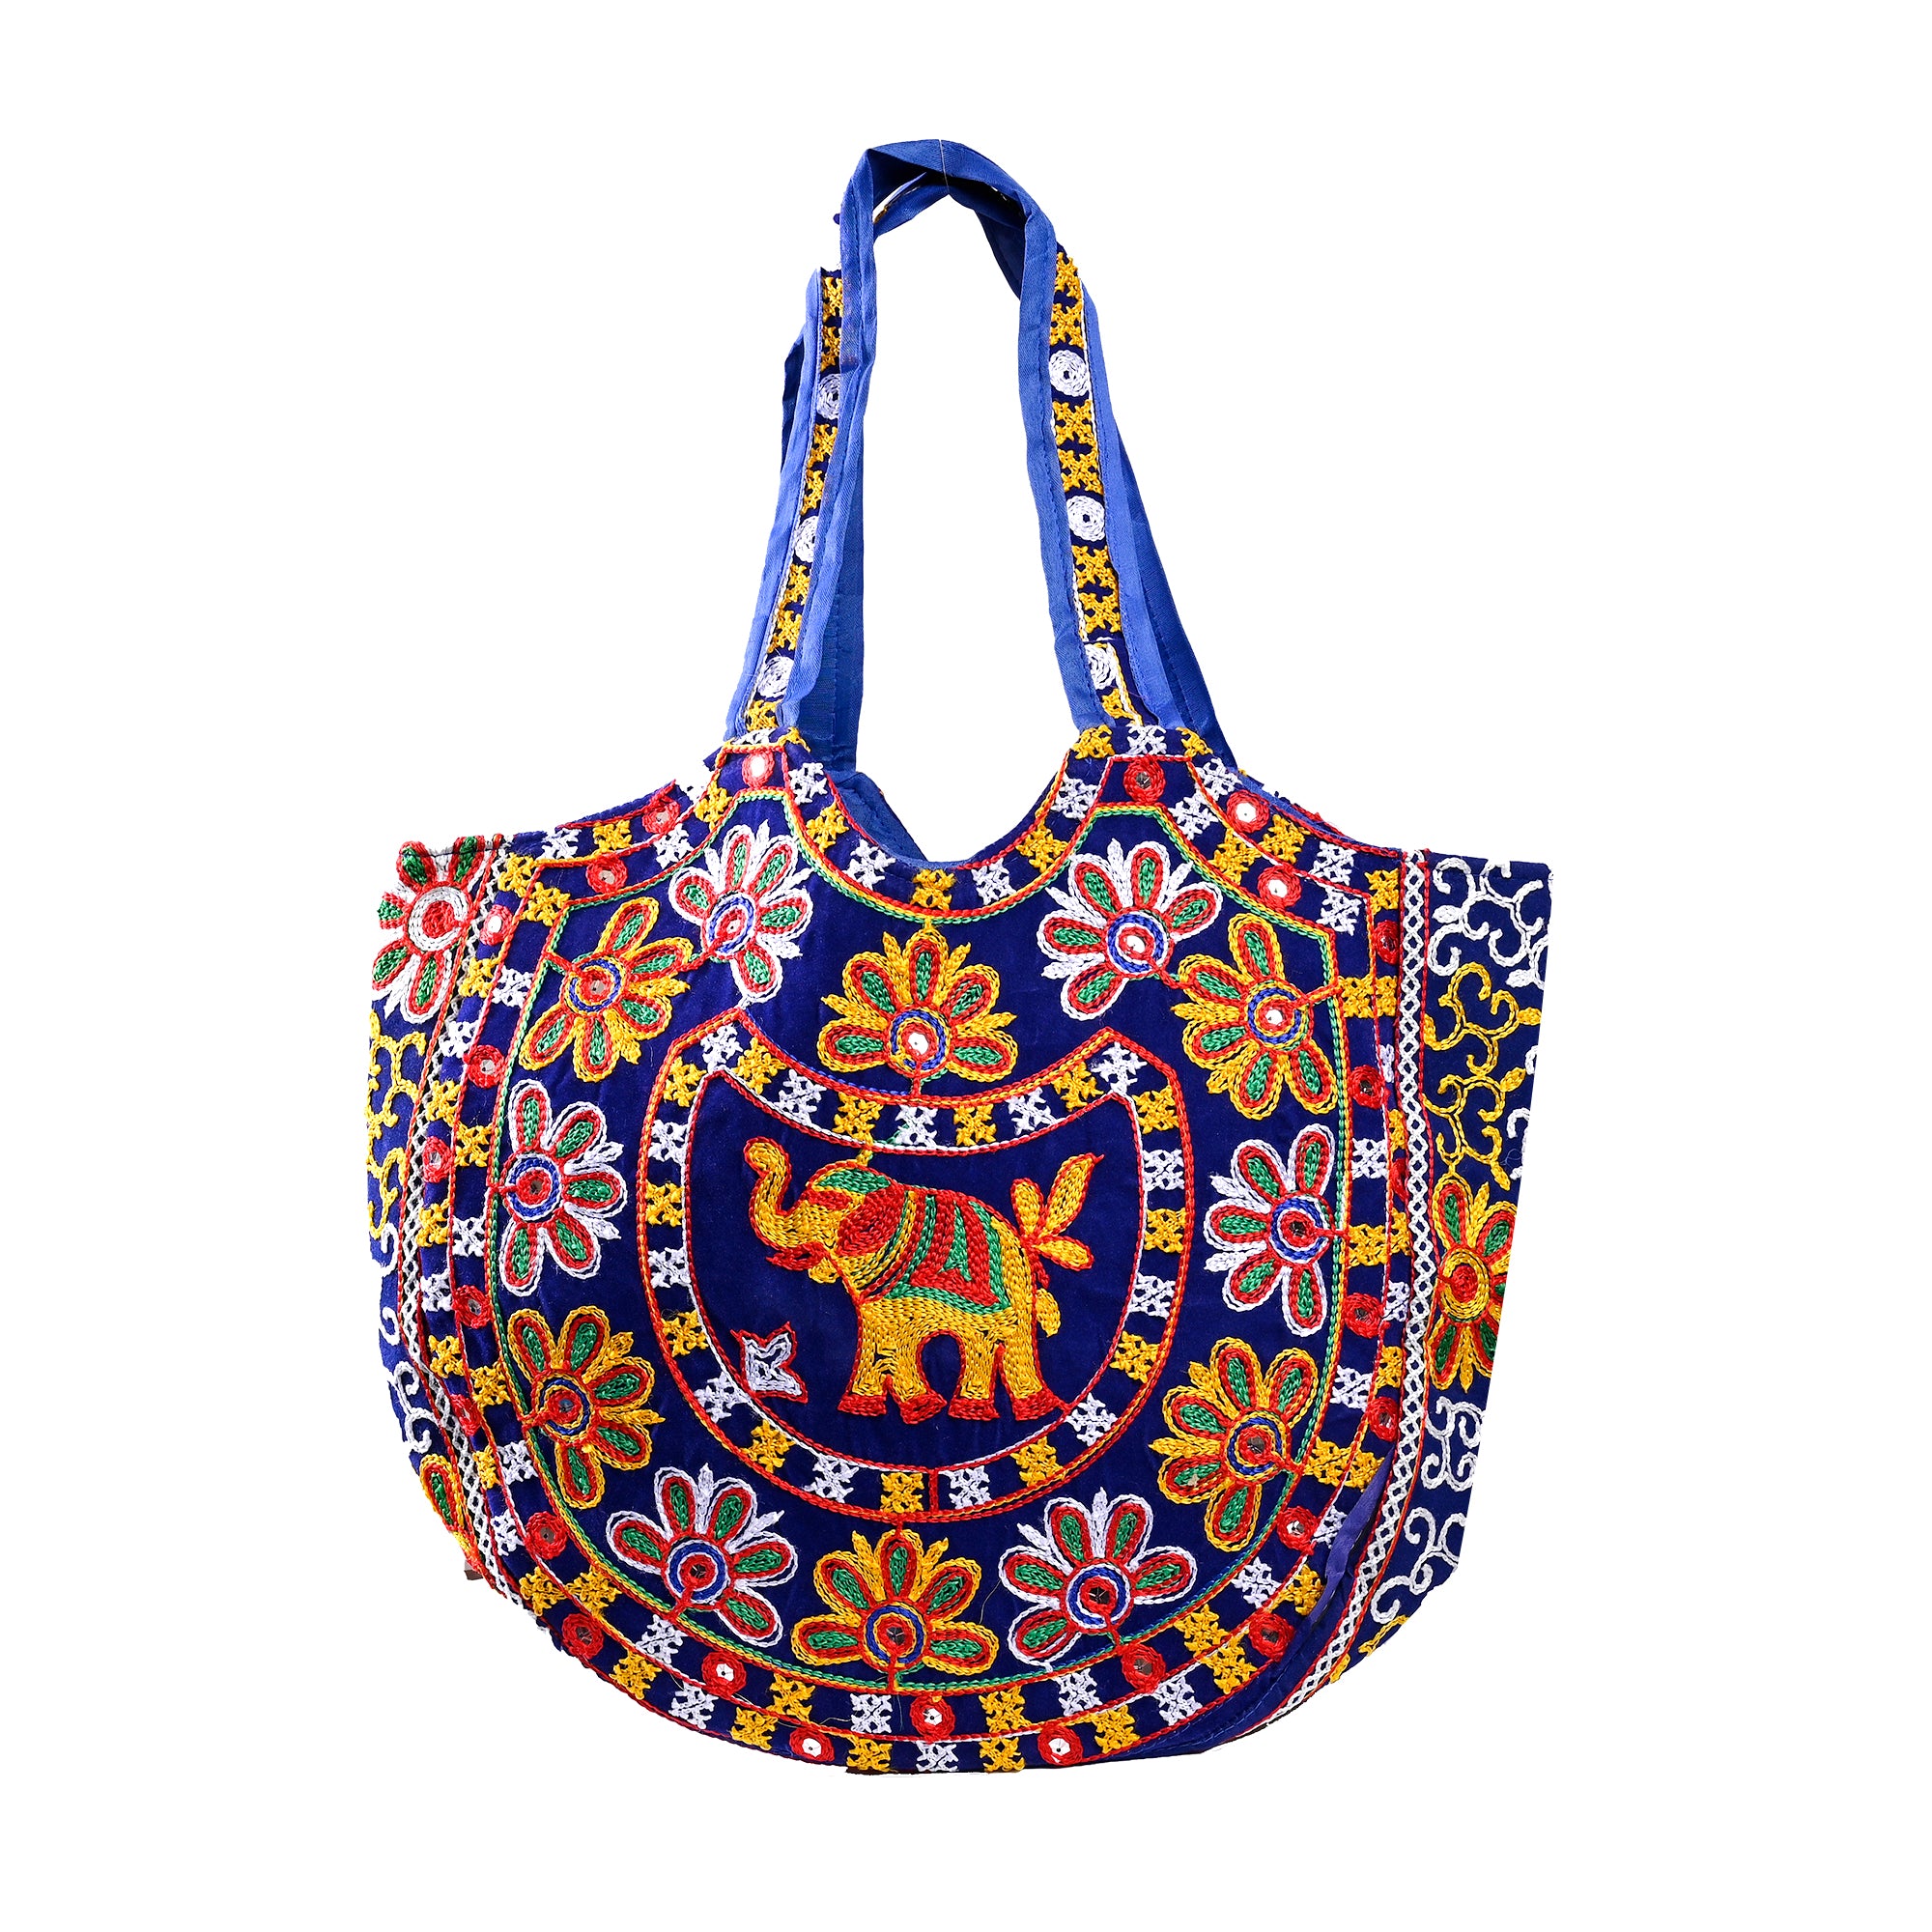 Traditional Rajasthani Bags